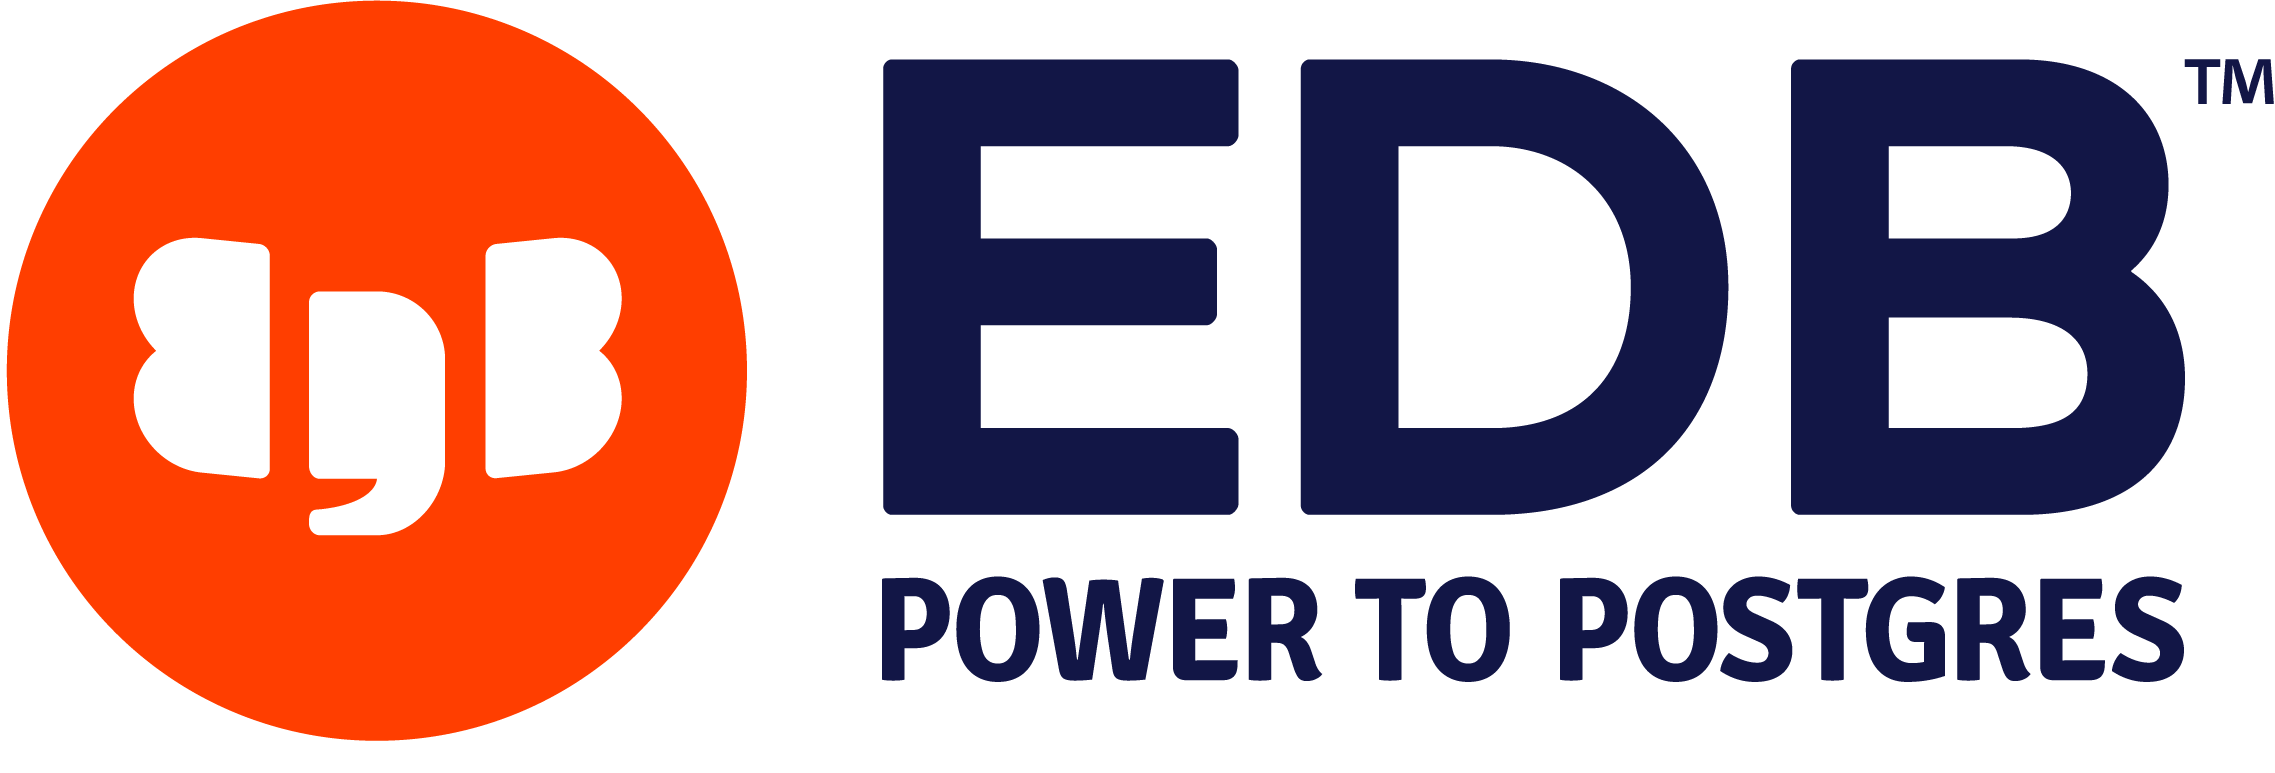 EDB_power_to_postgers.png